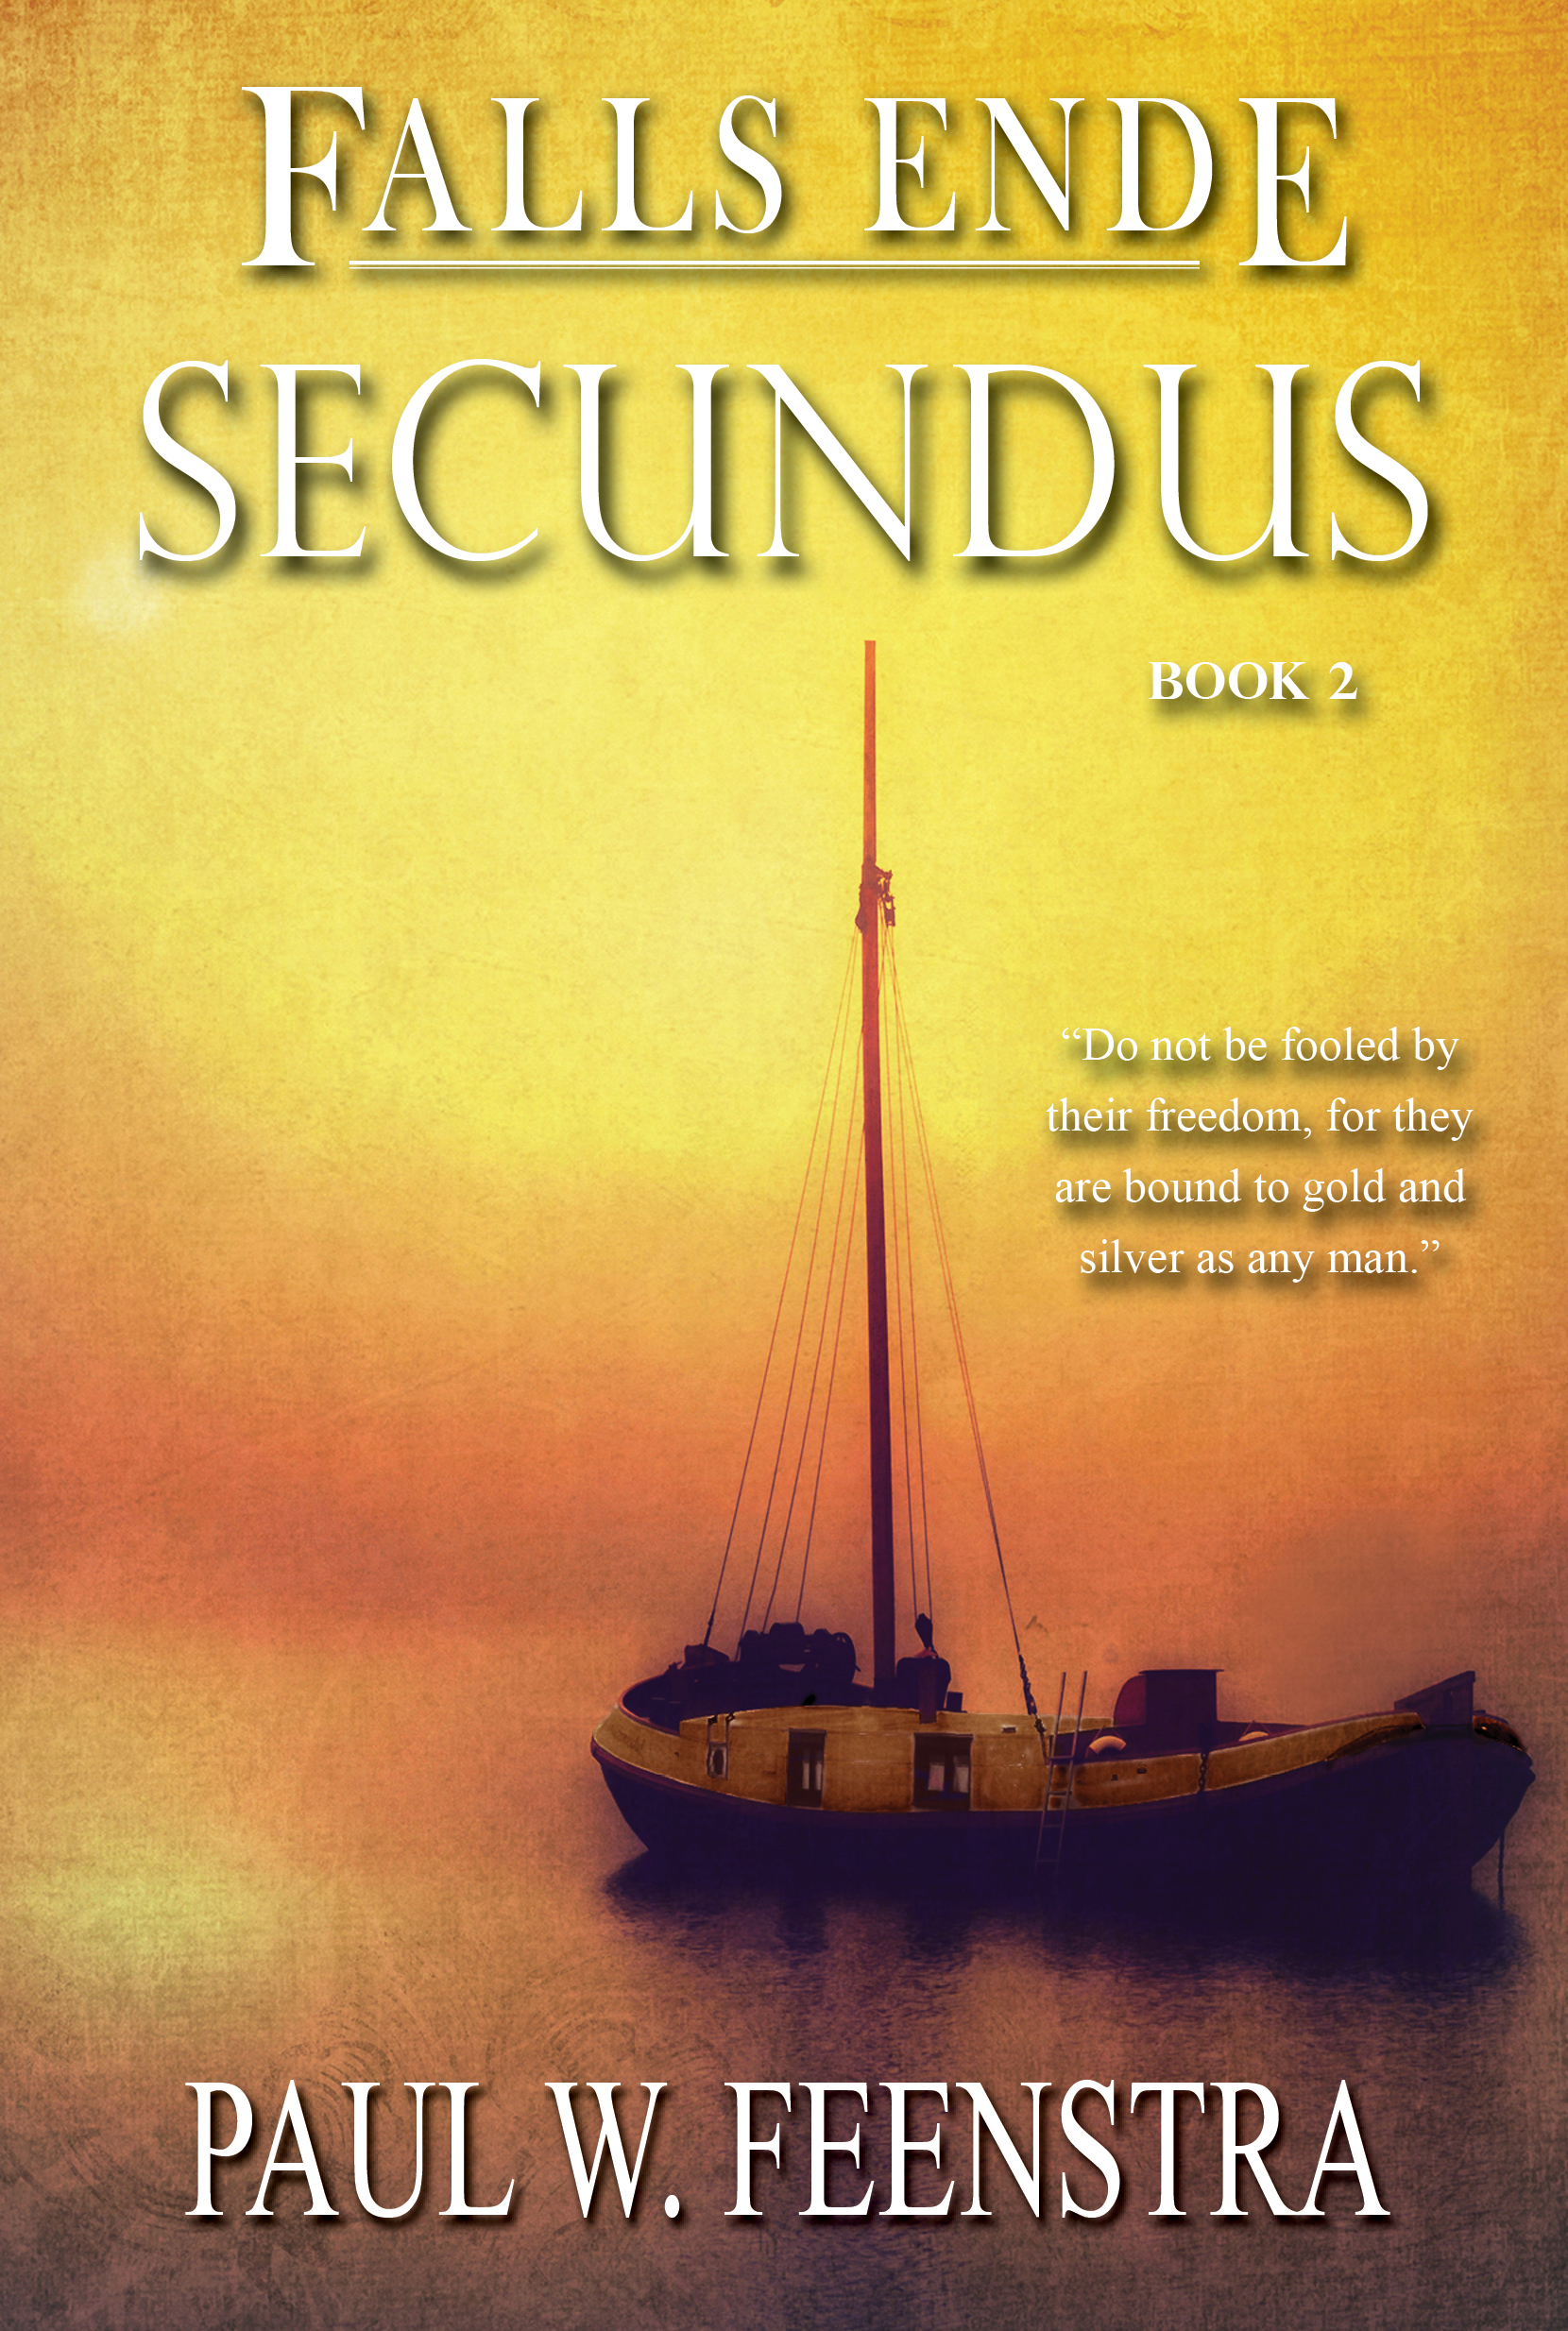 Falls Ende - Secundus Cover  (1).jpg